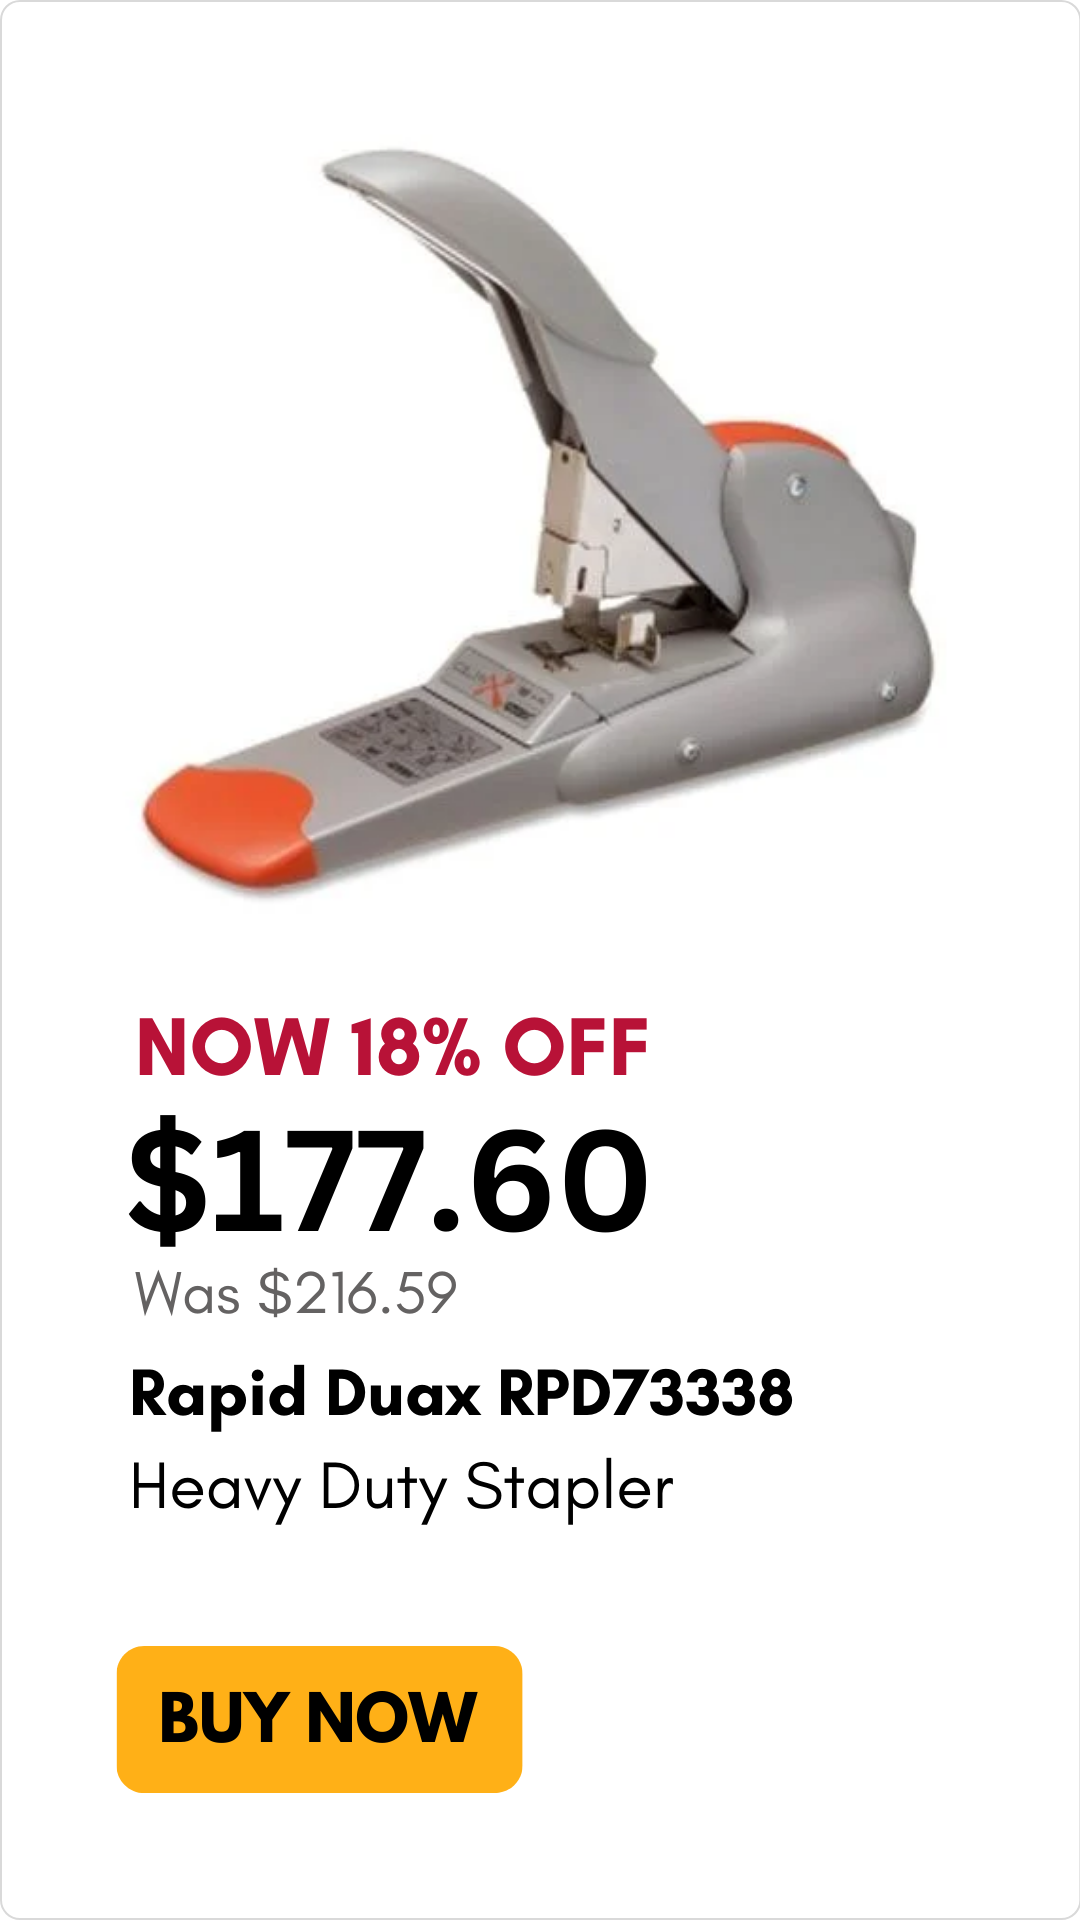 Rapid Duax Heavy Duty Stapler on sale for 18% off